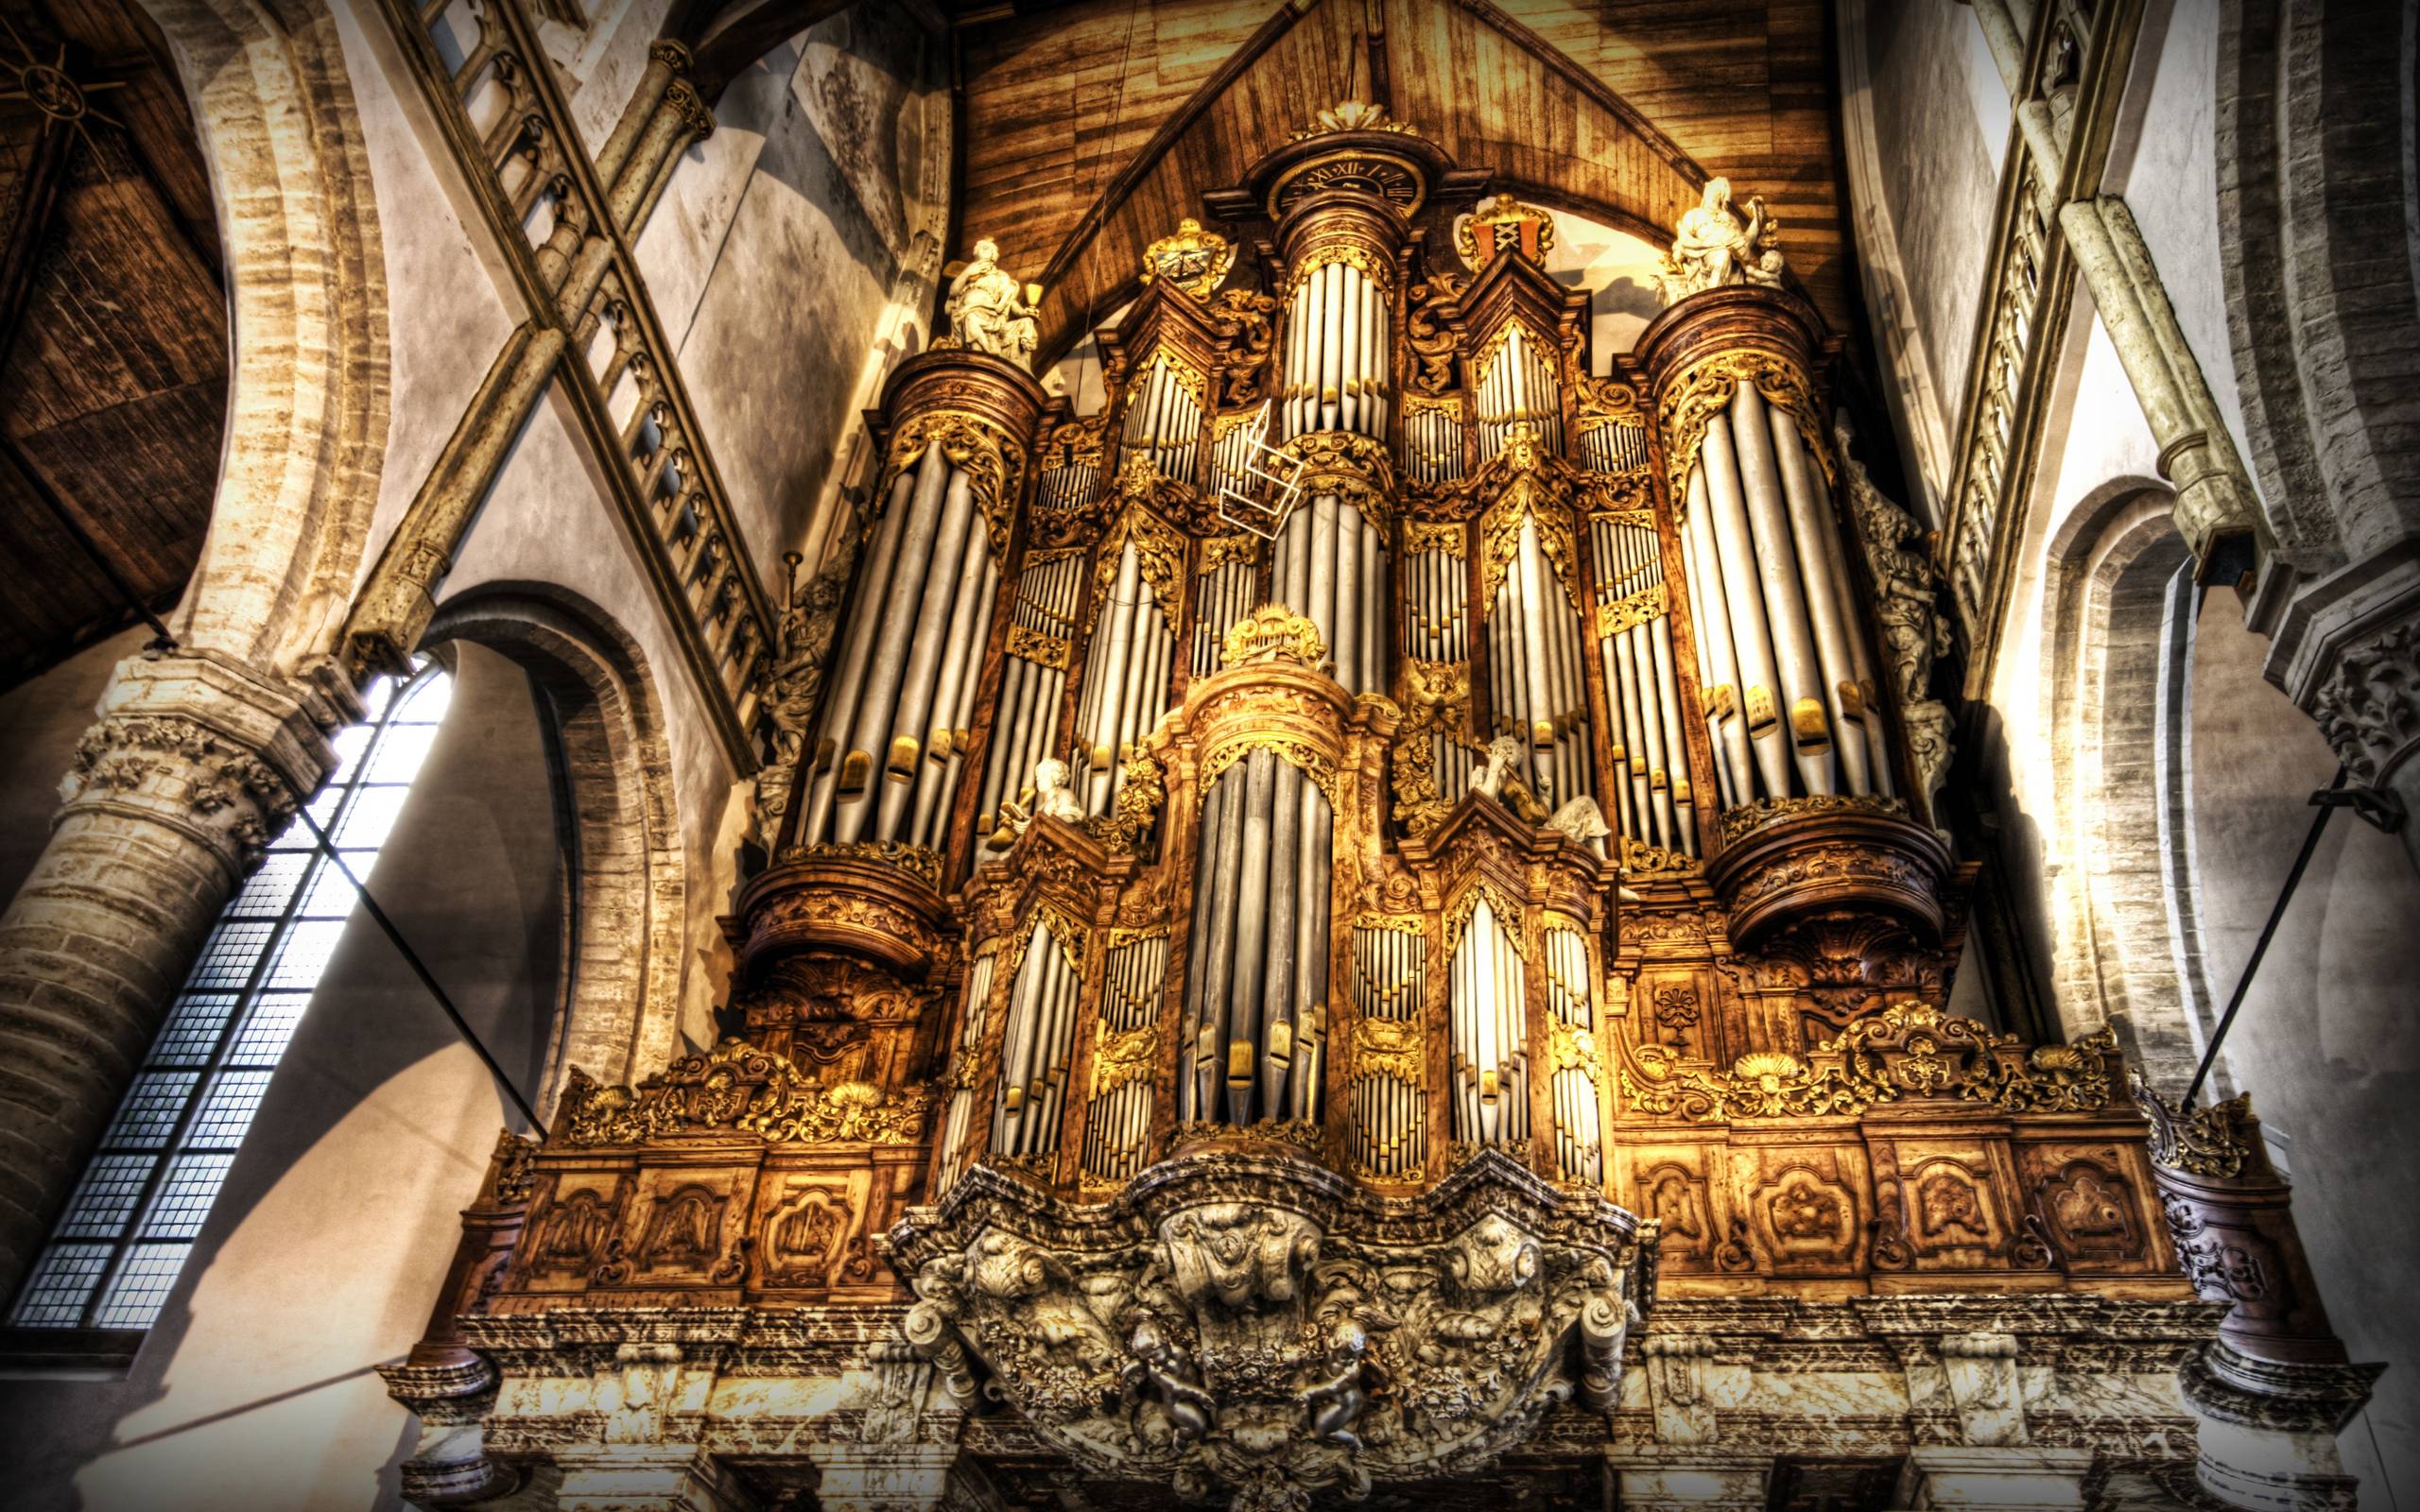 Music Pipe Organ Wallpaper 2560x1600 px Free Download